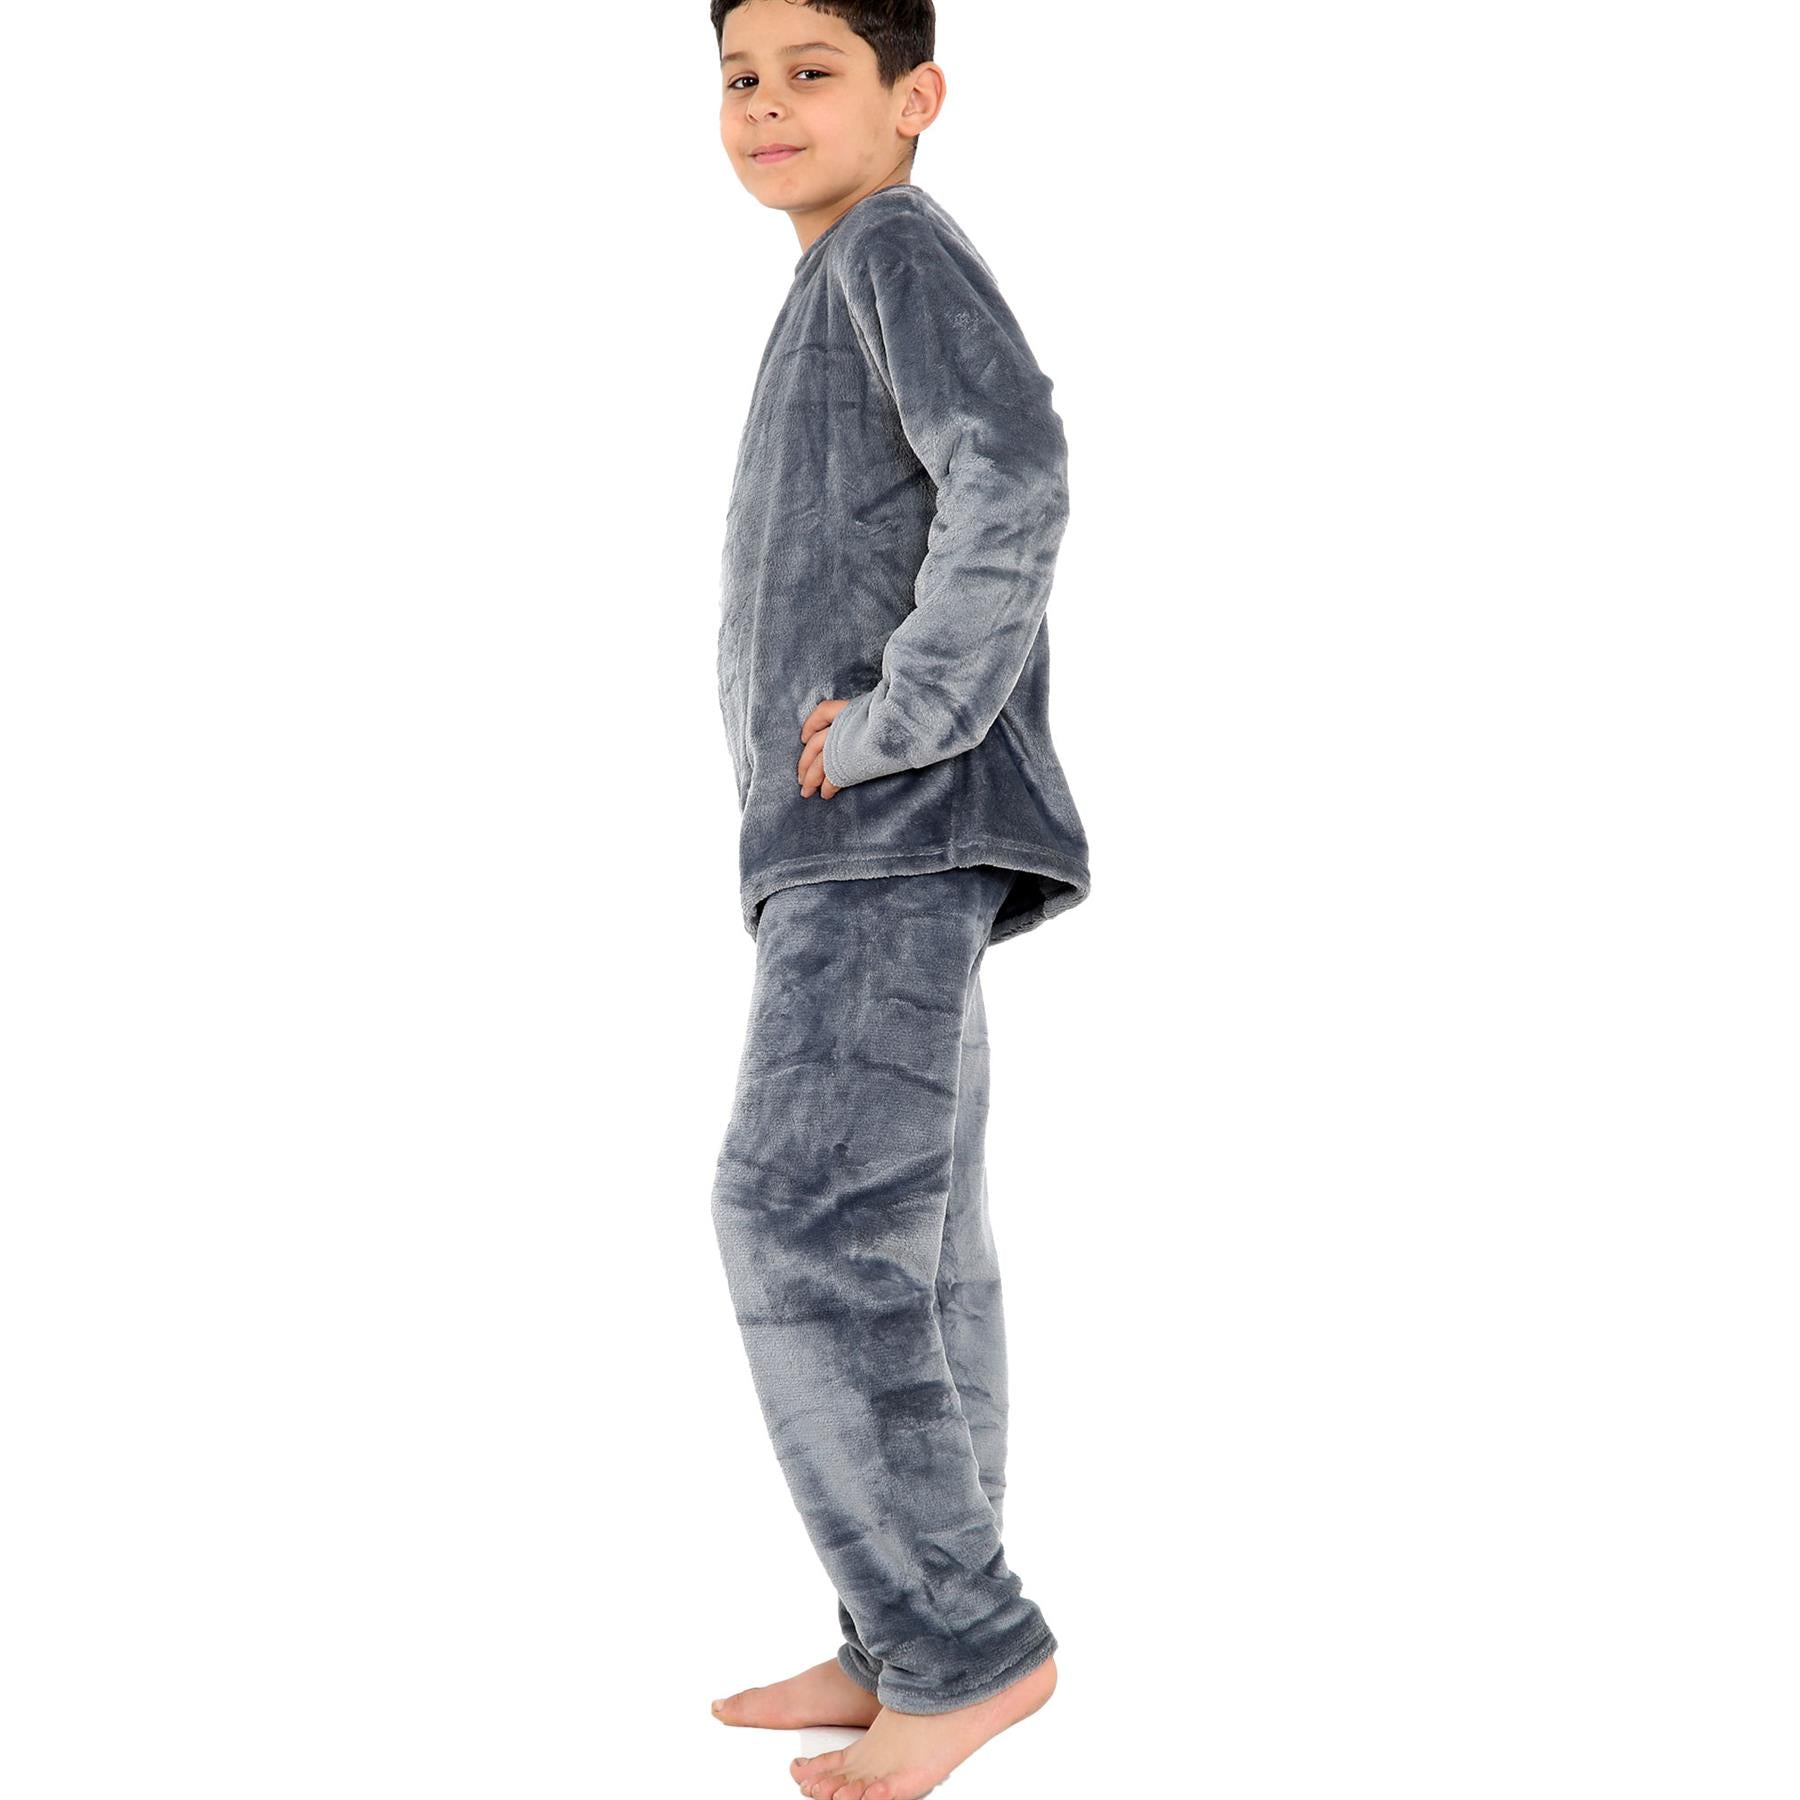 Kids Boys Girls Plain Crew Neck Warm Fleece Pyjamas 2 Piece PJS Set